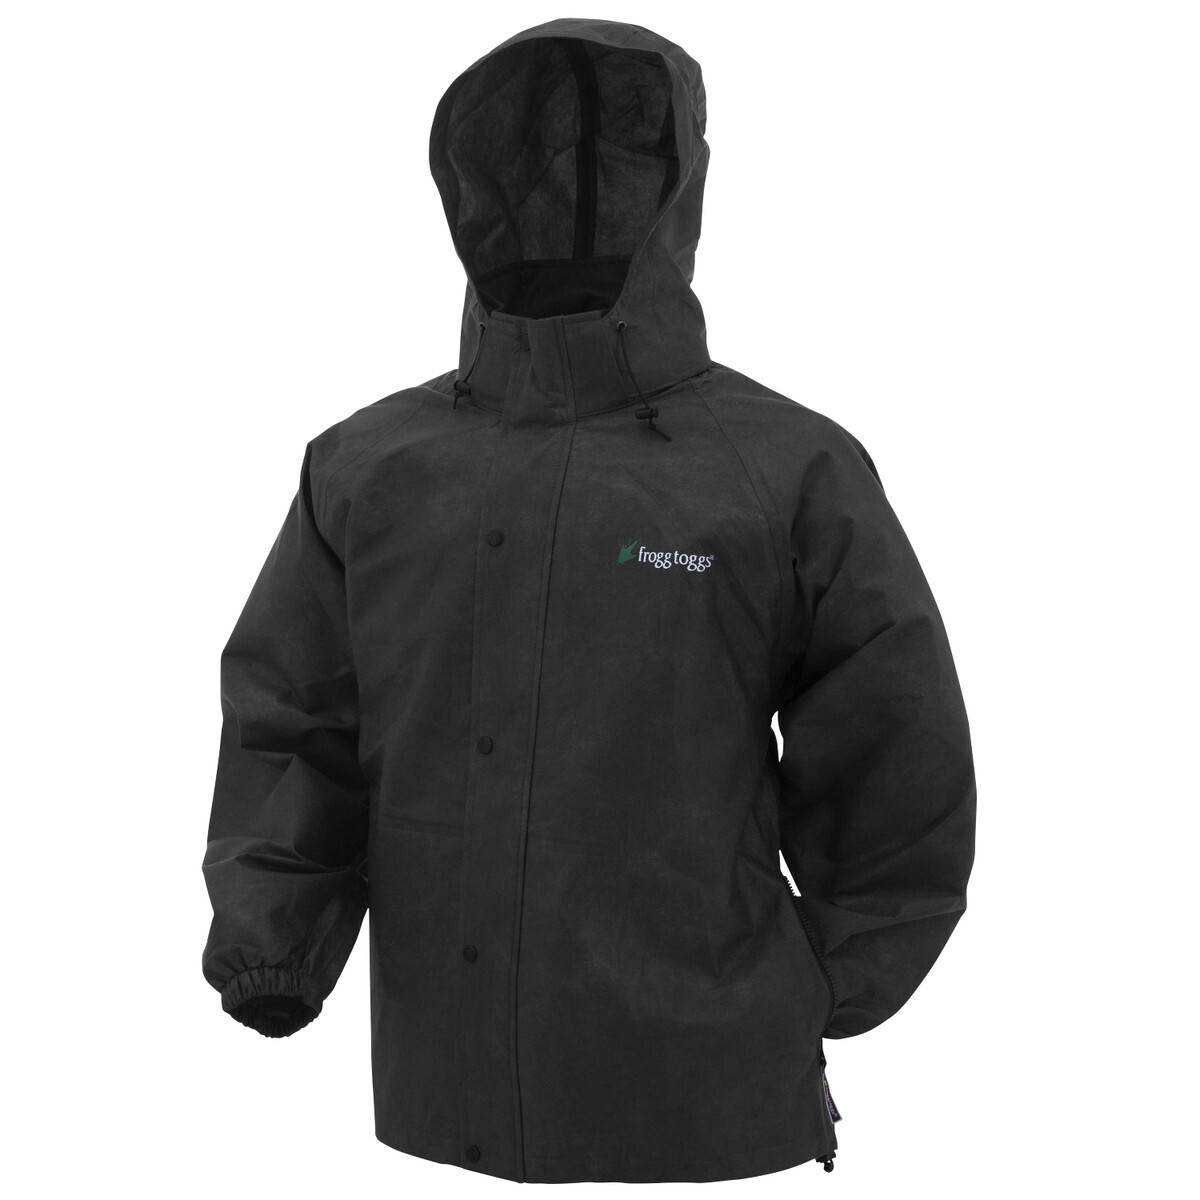 FROGG TOGGS Pro Action Rain Jacket, Large, Black, PA6312301LG 